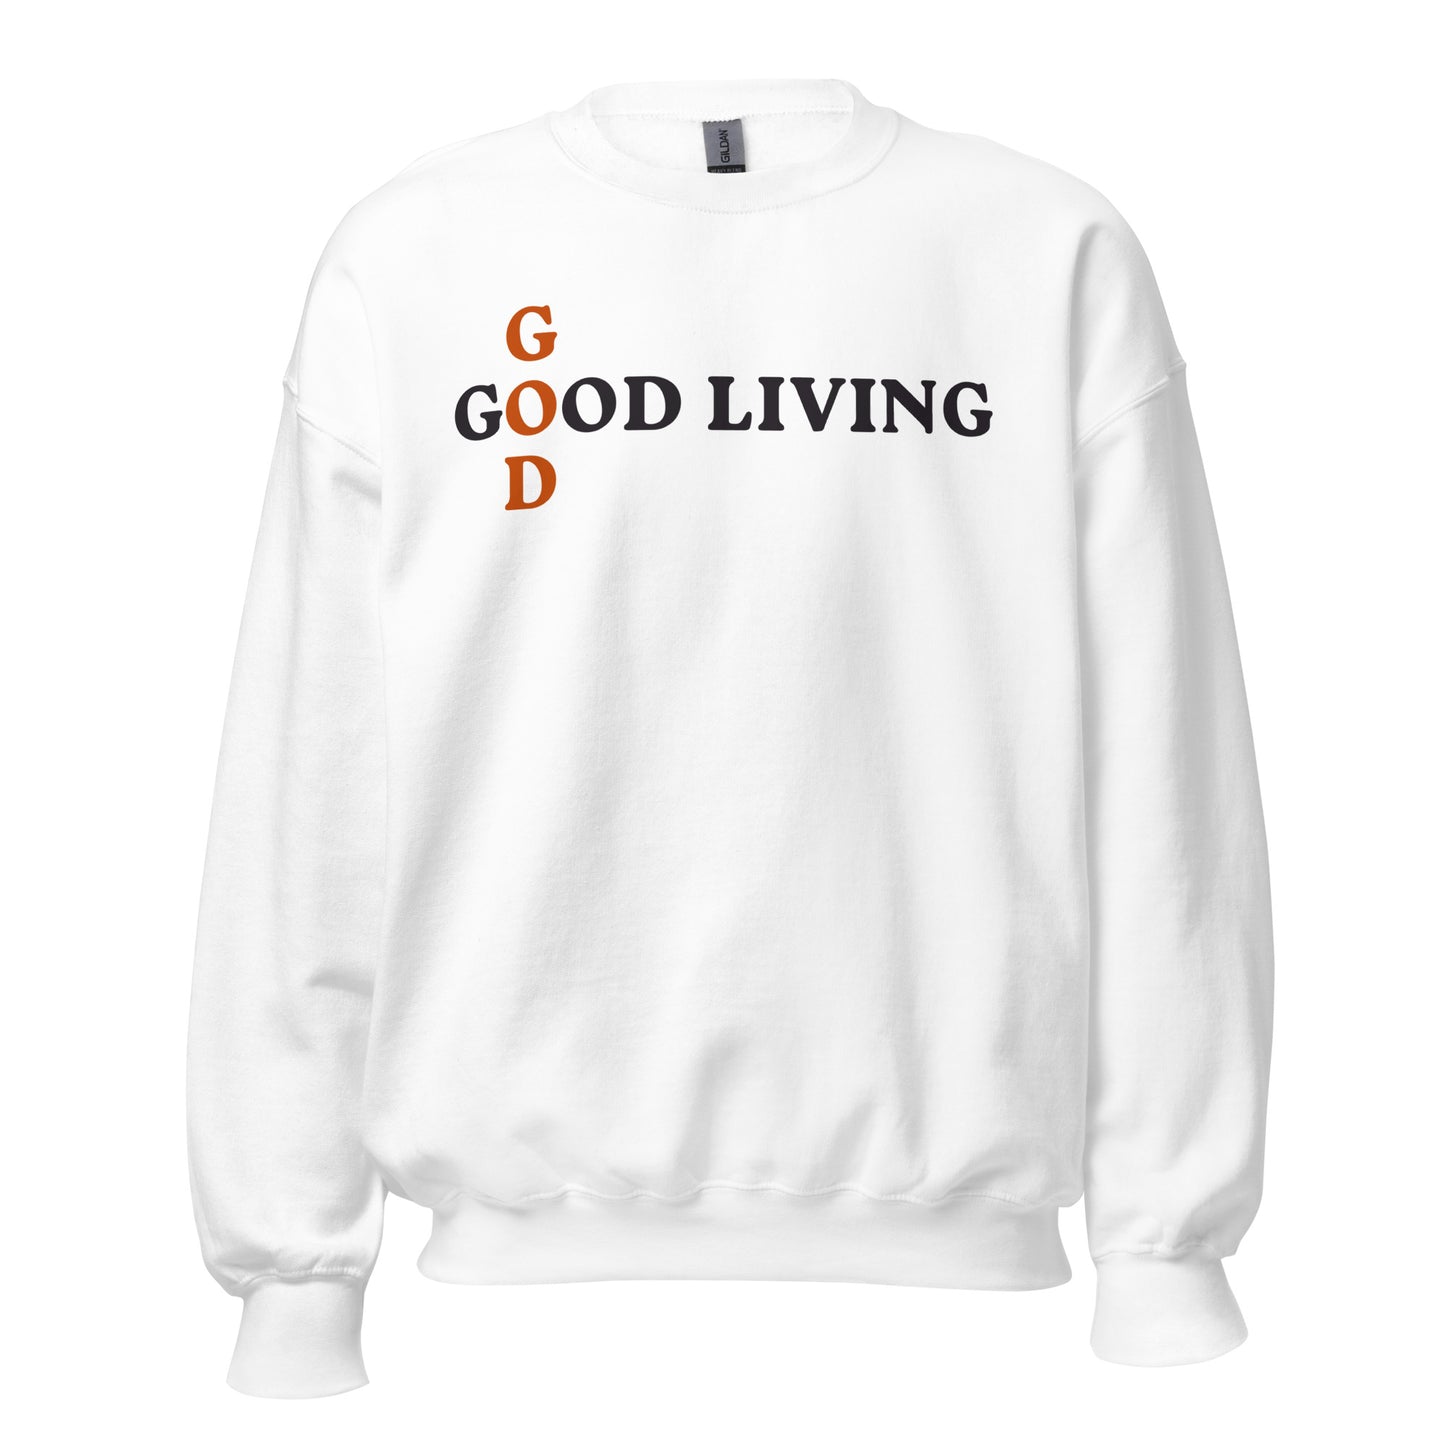 Good God Living Sweatshirt